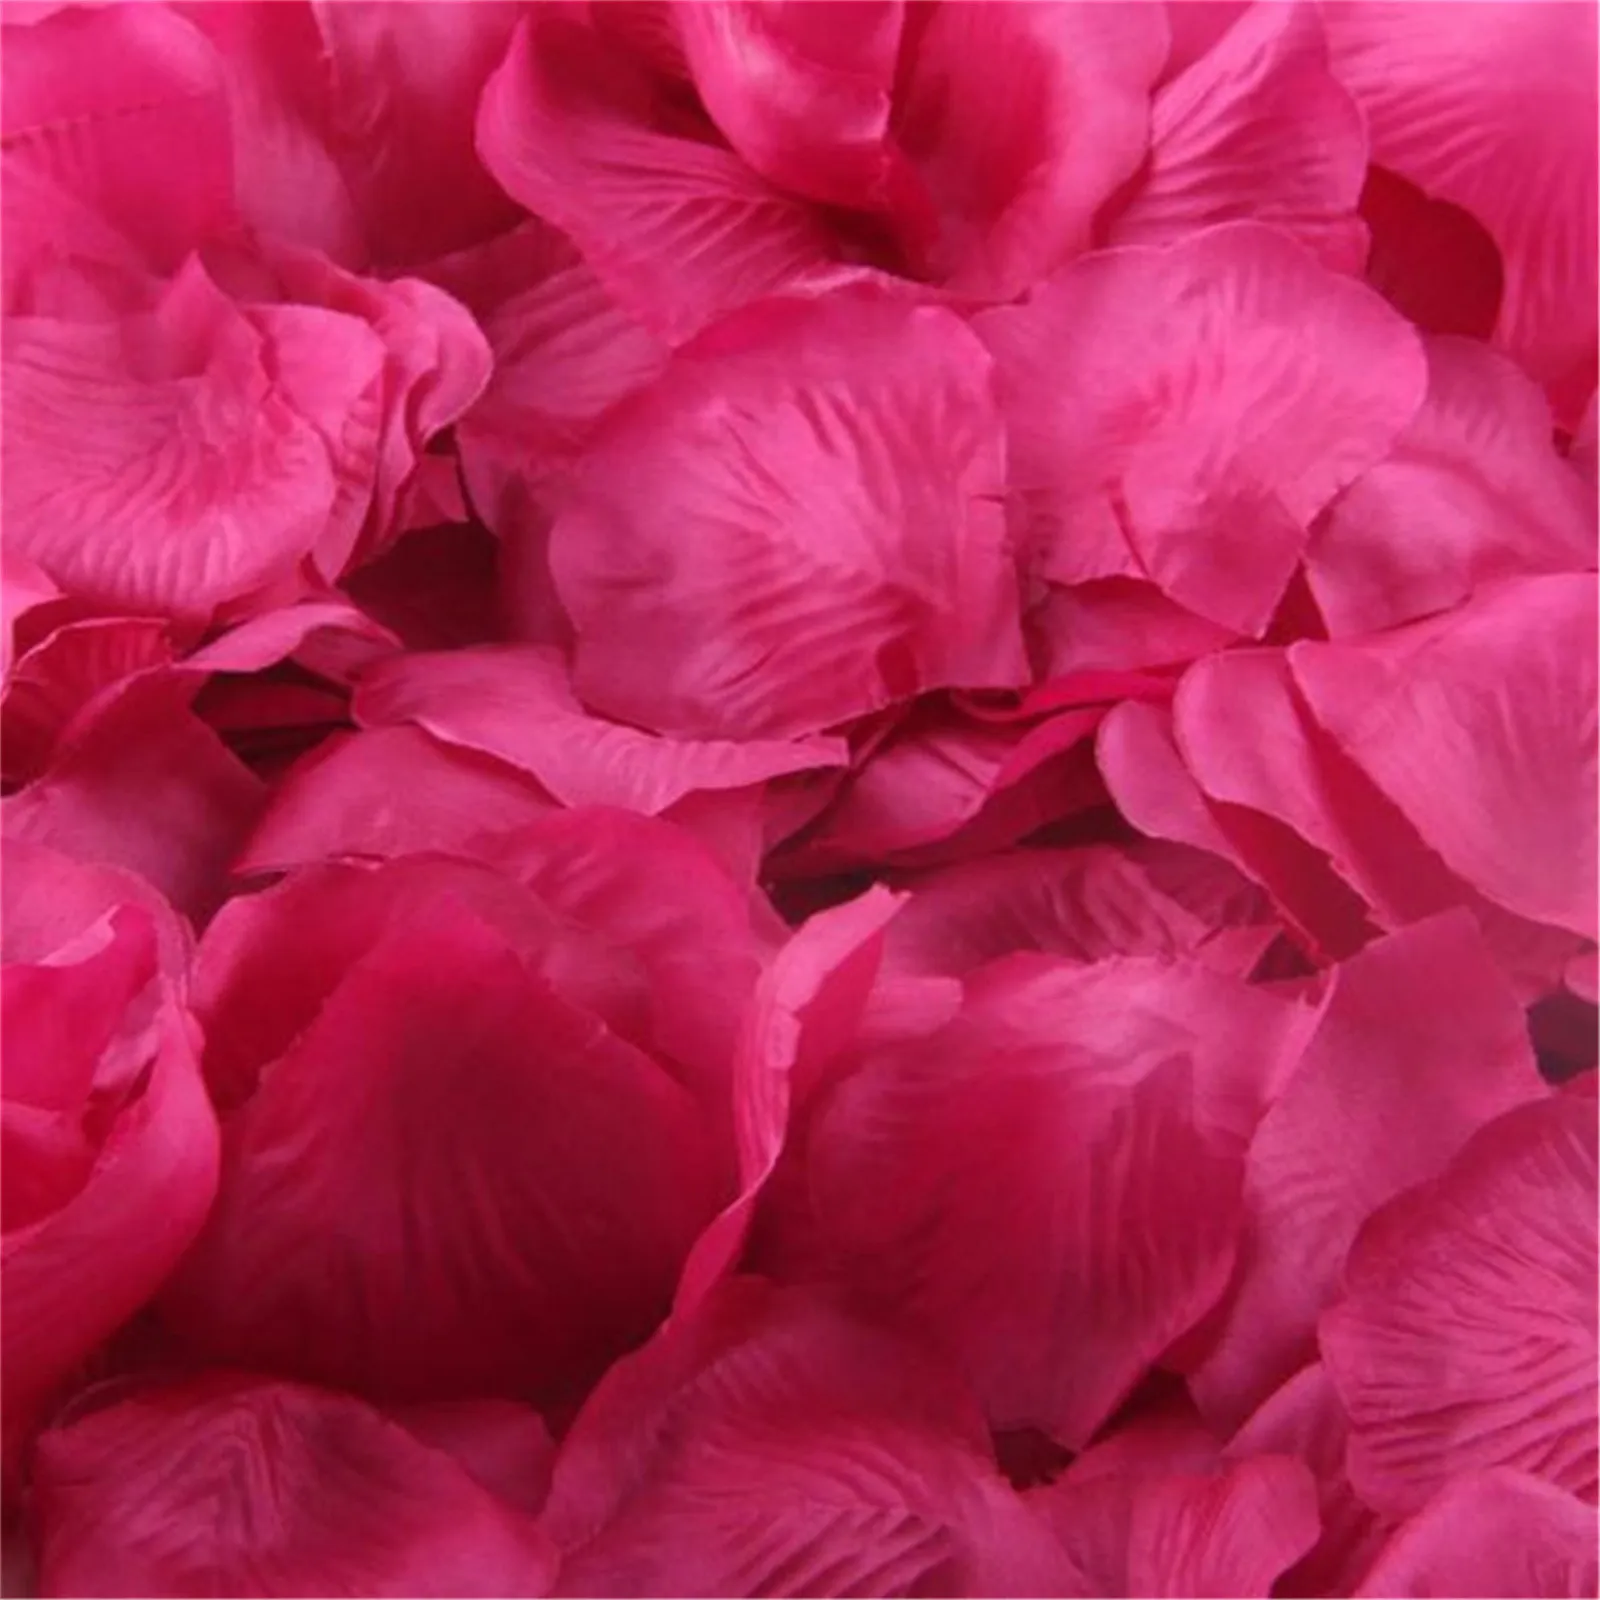 

100PCS Fake Rose Petals Flower Toss Artificial Silk Wedding Petal For Party Event Wedding Decoration Christmas Home Decoration